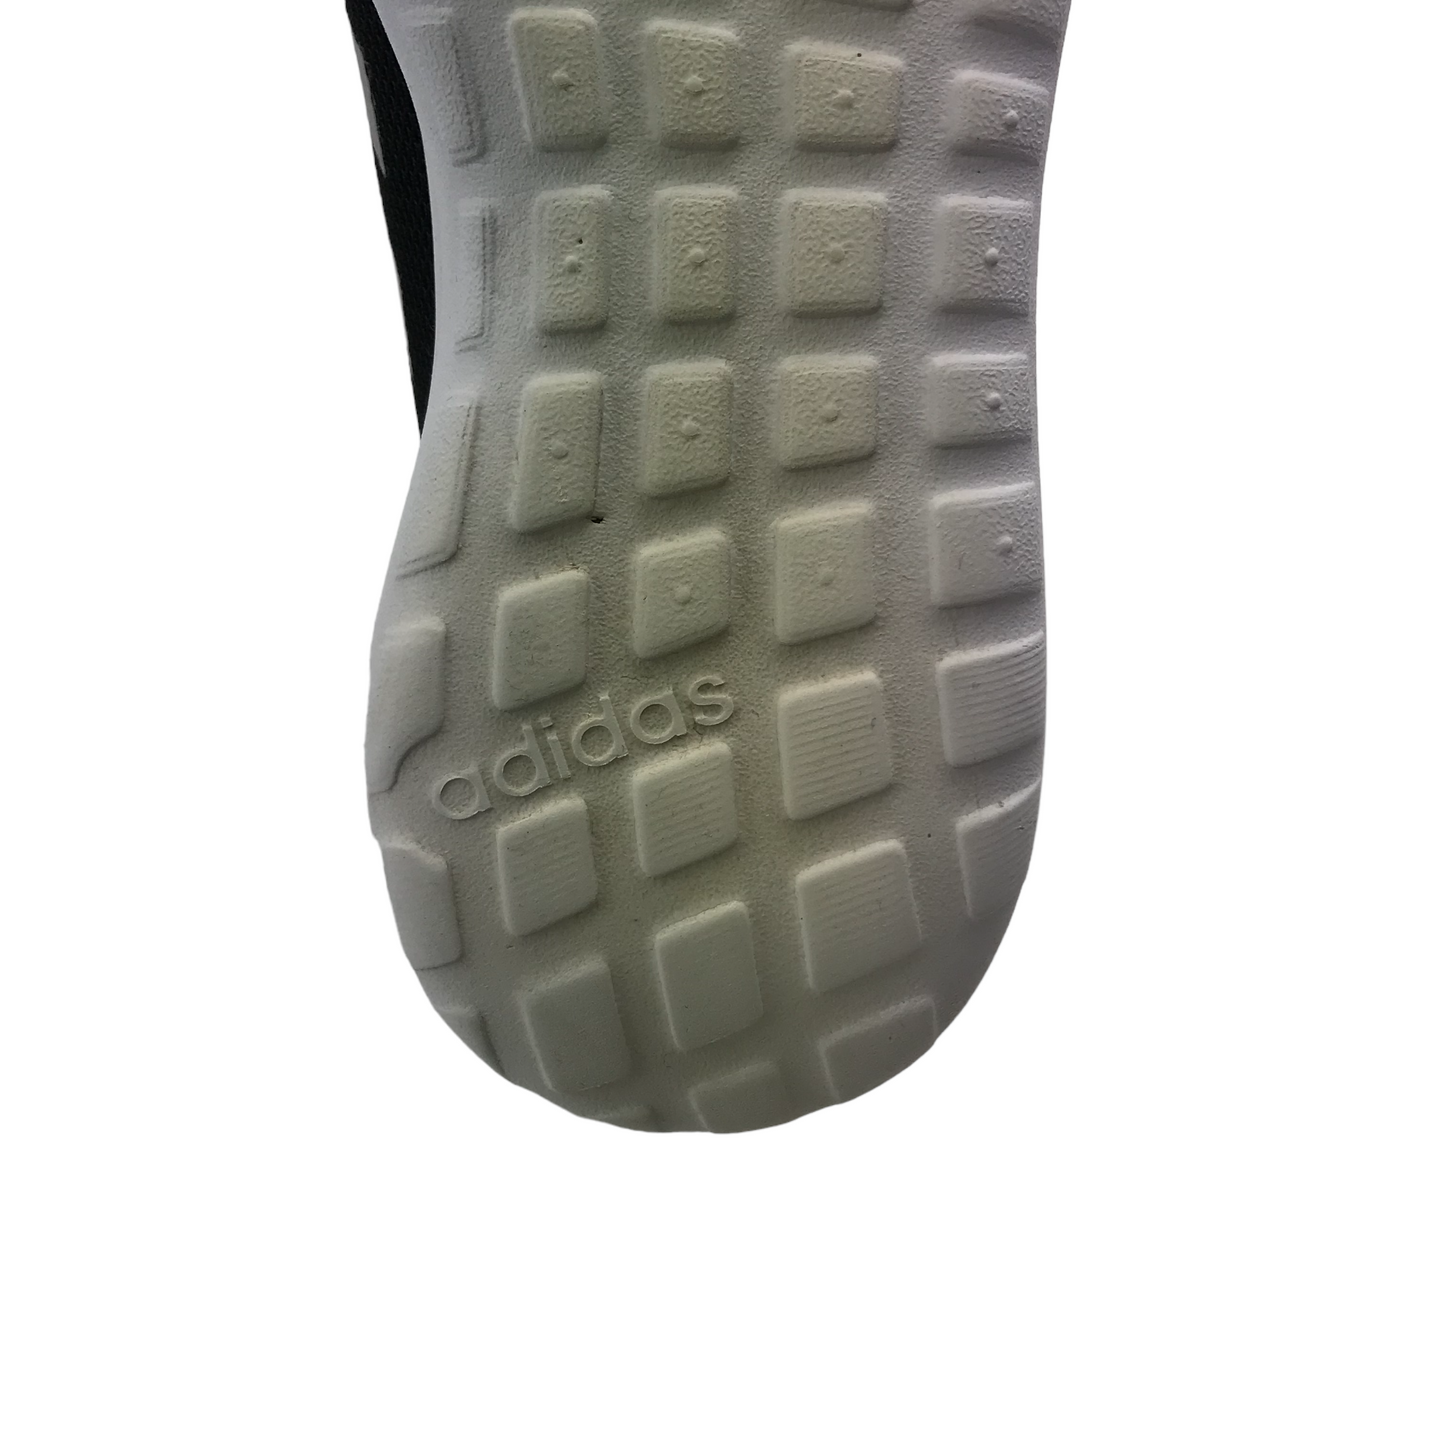 Adidas Trainer Shoe Size 5.5 Black Classic